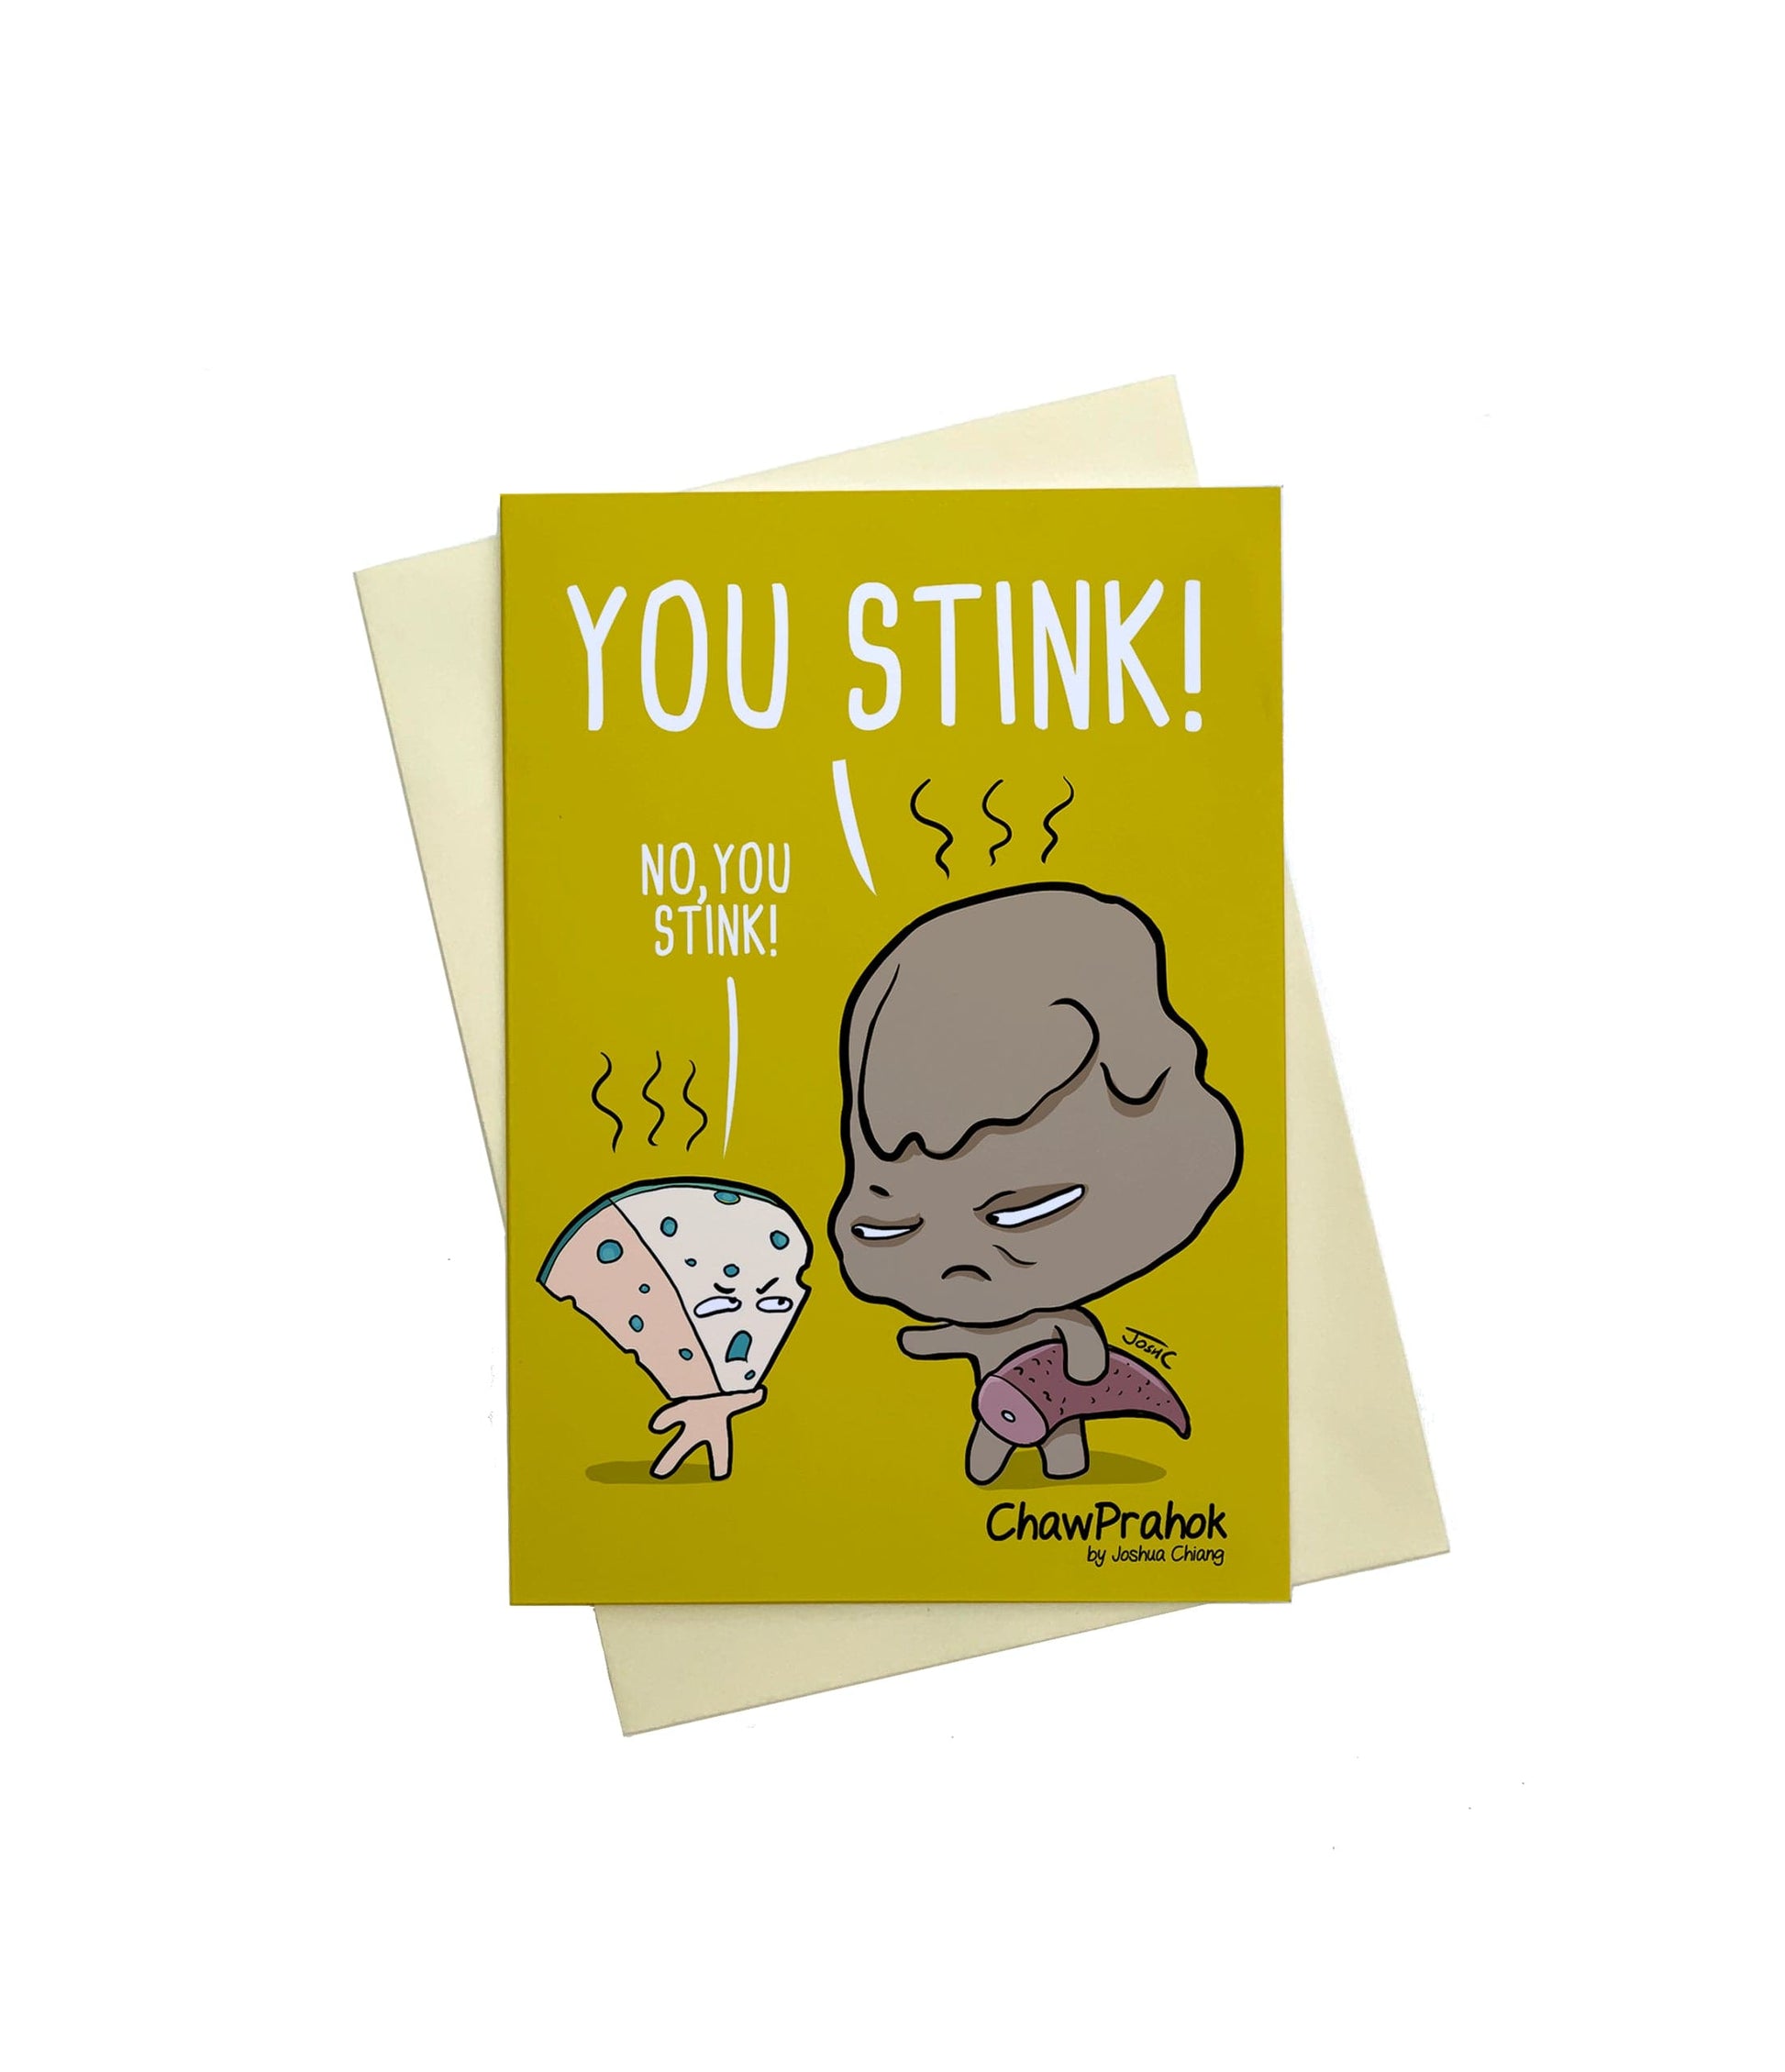 I AM OK! Greeting Card YOU STINK! Greeting Card YOU STINK! Greeting Card 